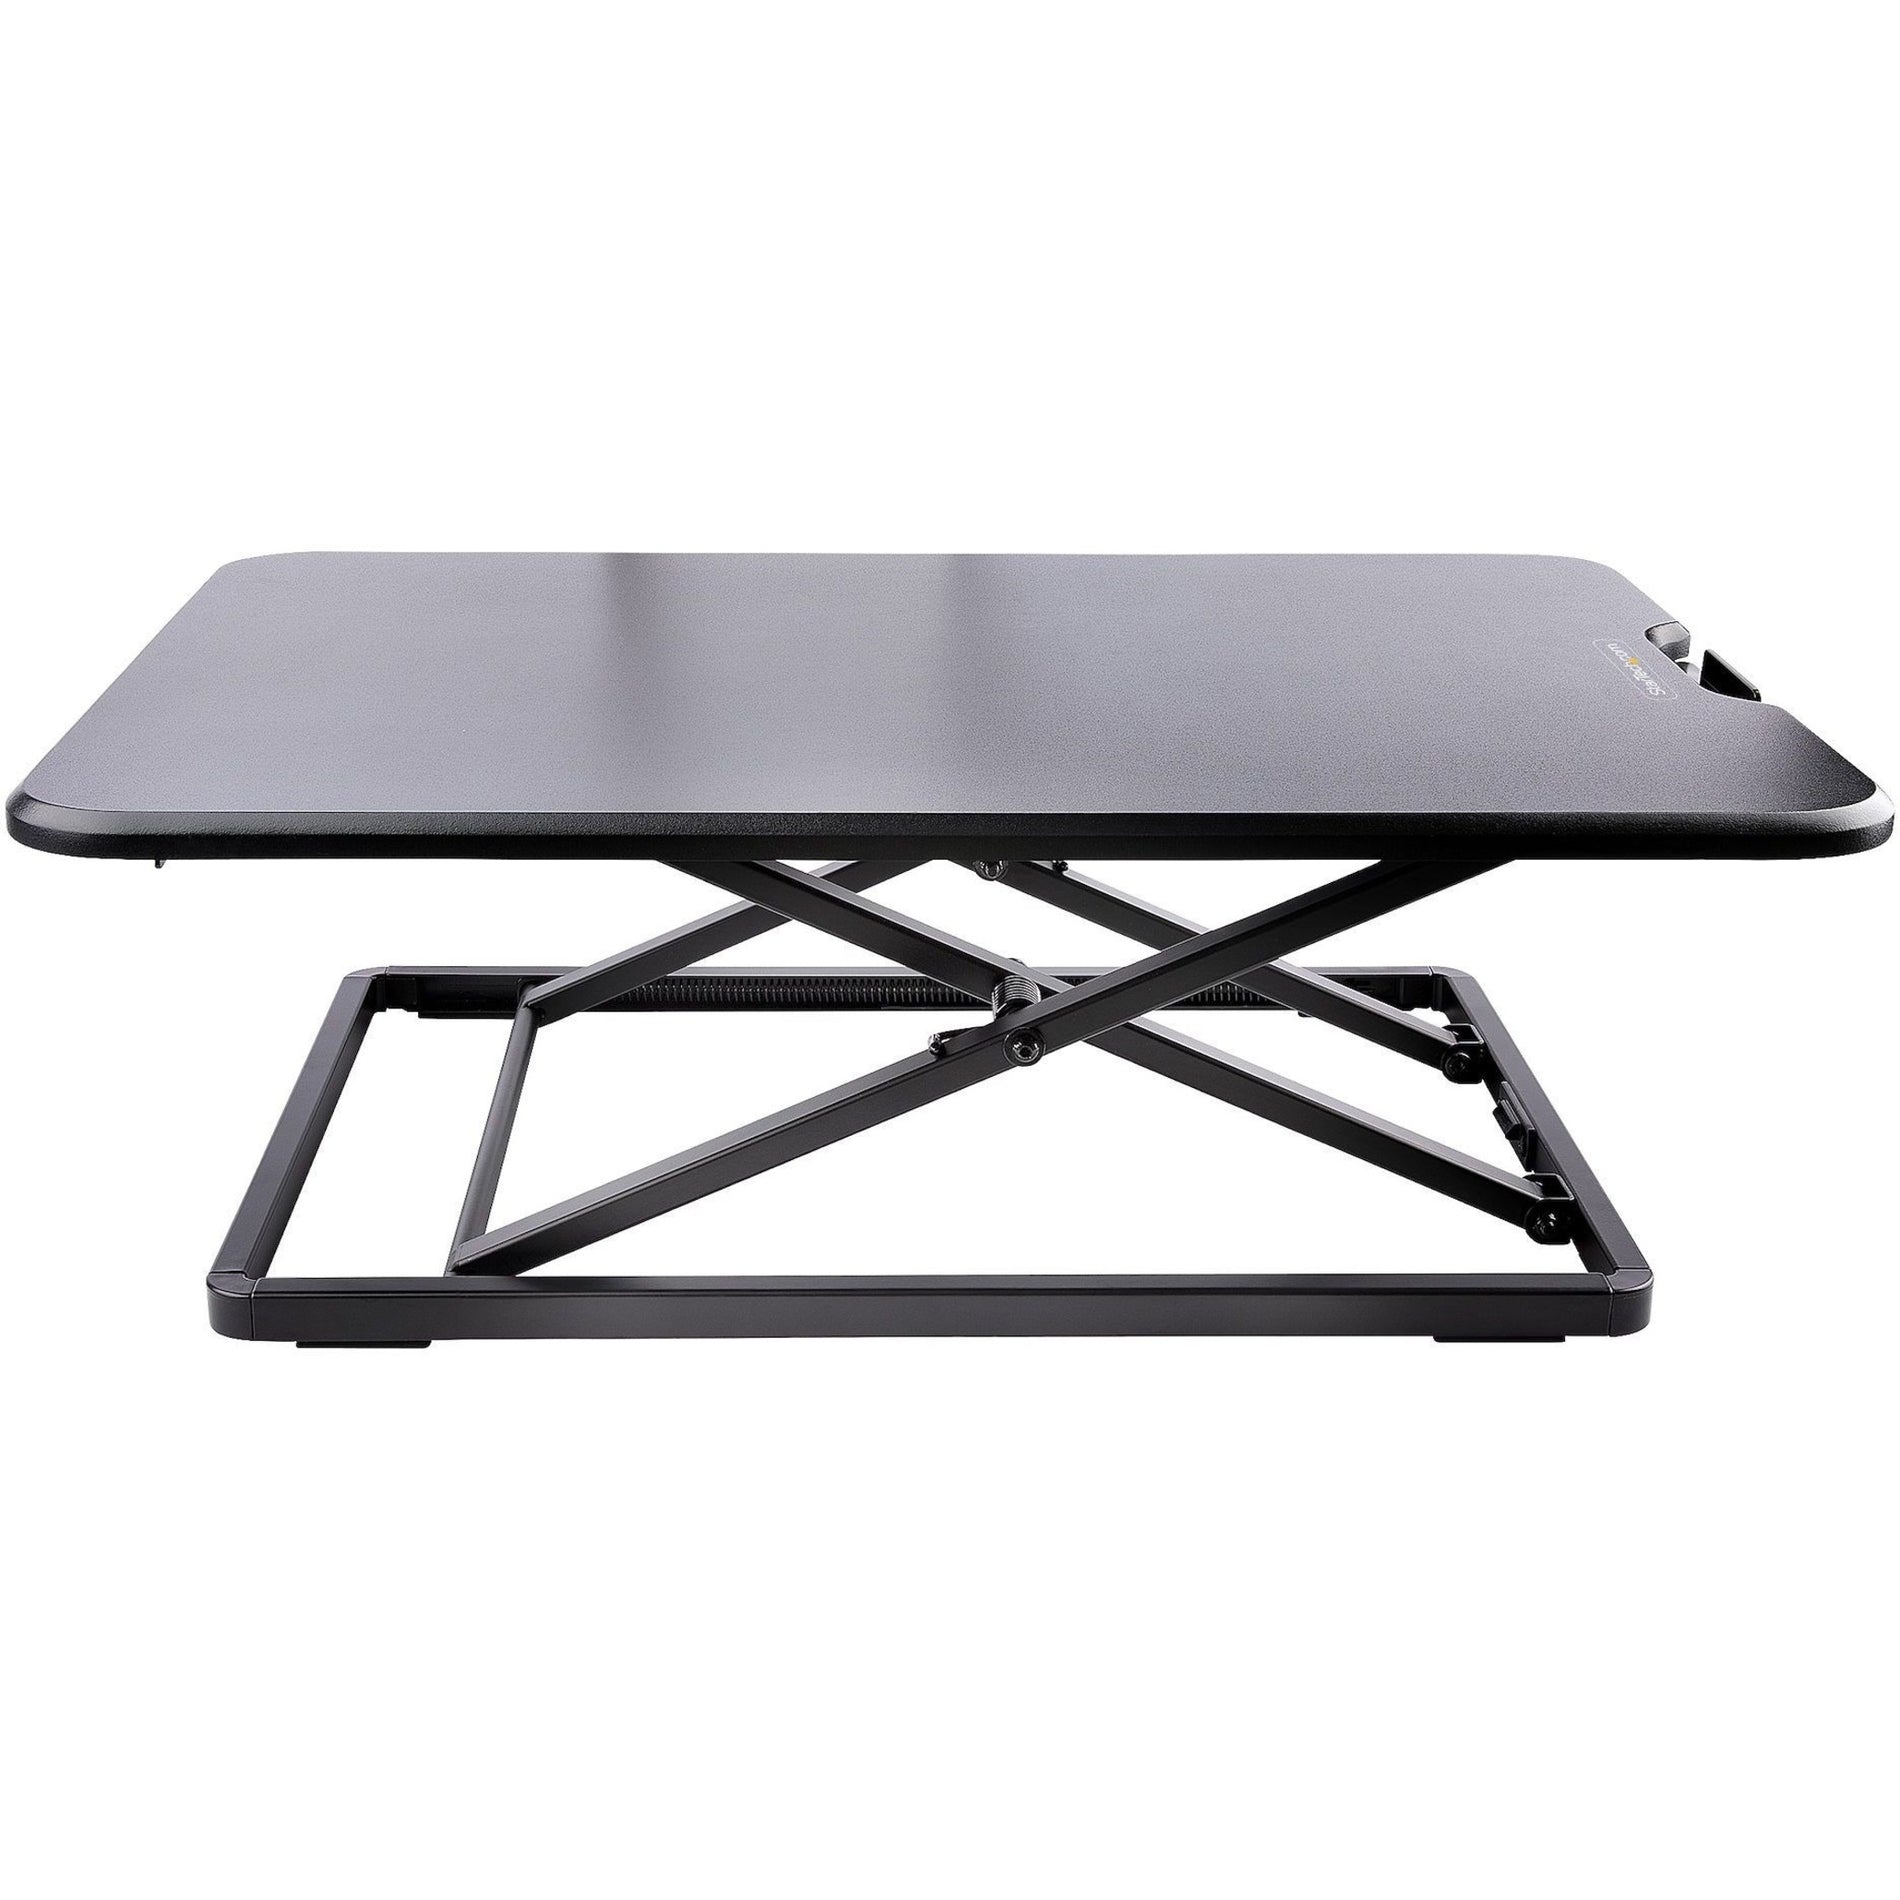 StarTech.com Laptop-Sit-Stand, Ergonomic Adjustable Notebook Stand, Six Height Options